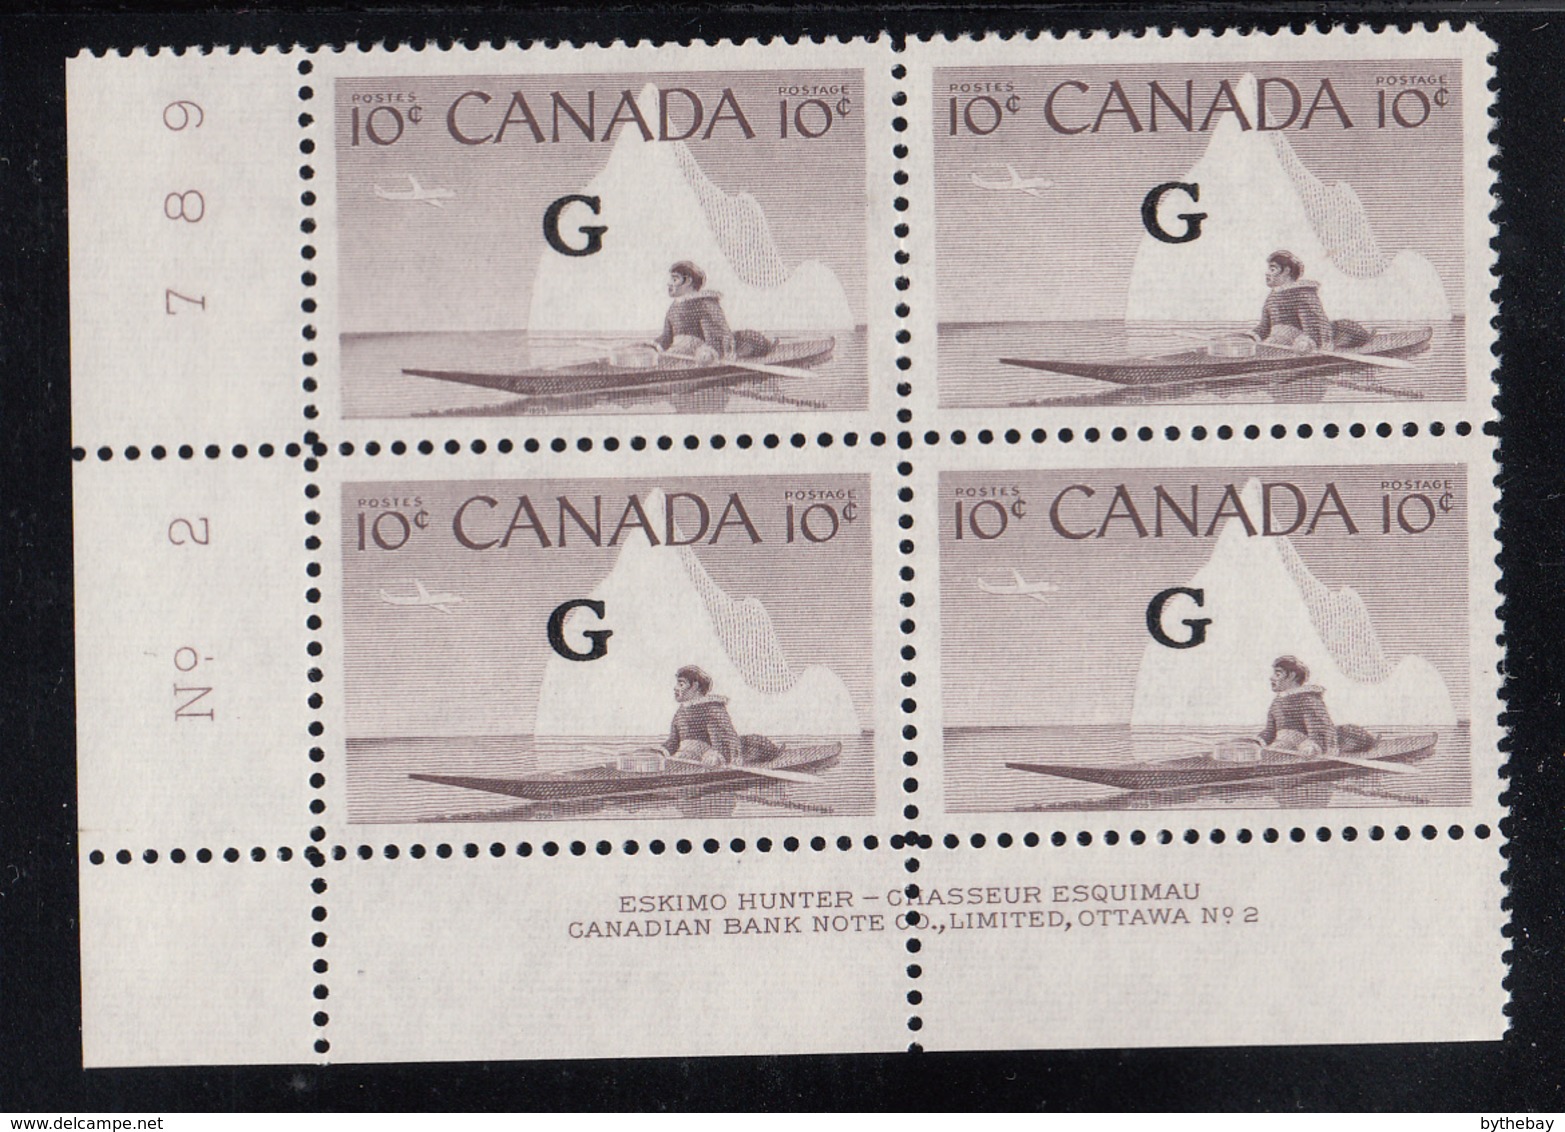 Canada MNH Scott #O39 'G' Overprint On 10c Inuk, Kayak Plate #2 Lower Left PB - Sovraccarichi